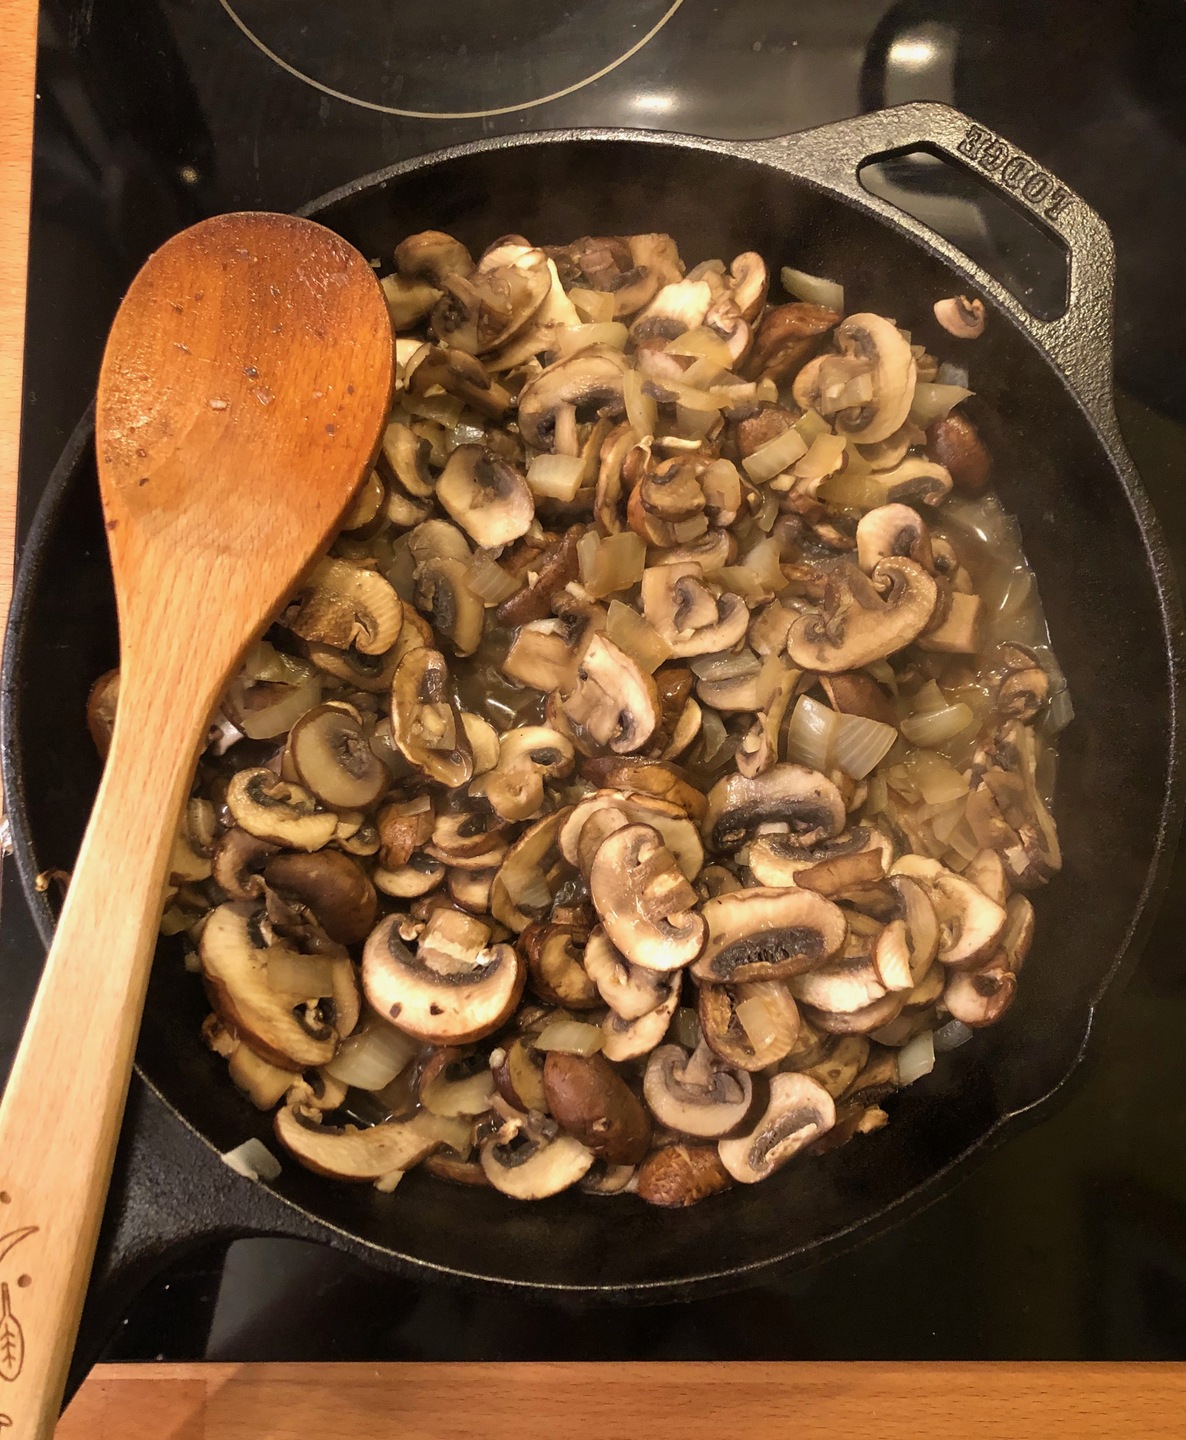 Stovetop cooking mushrooms